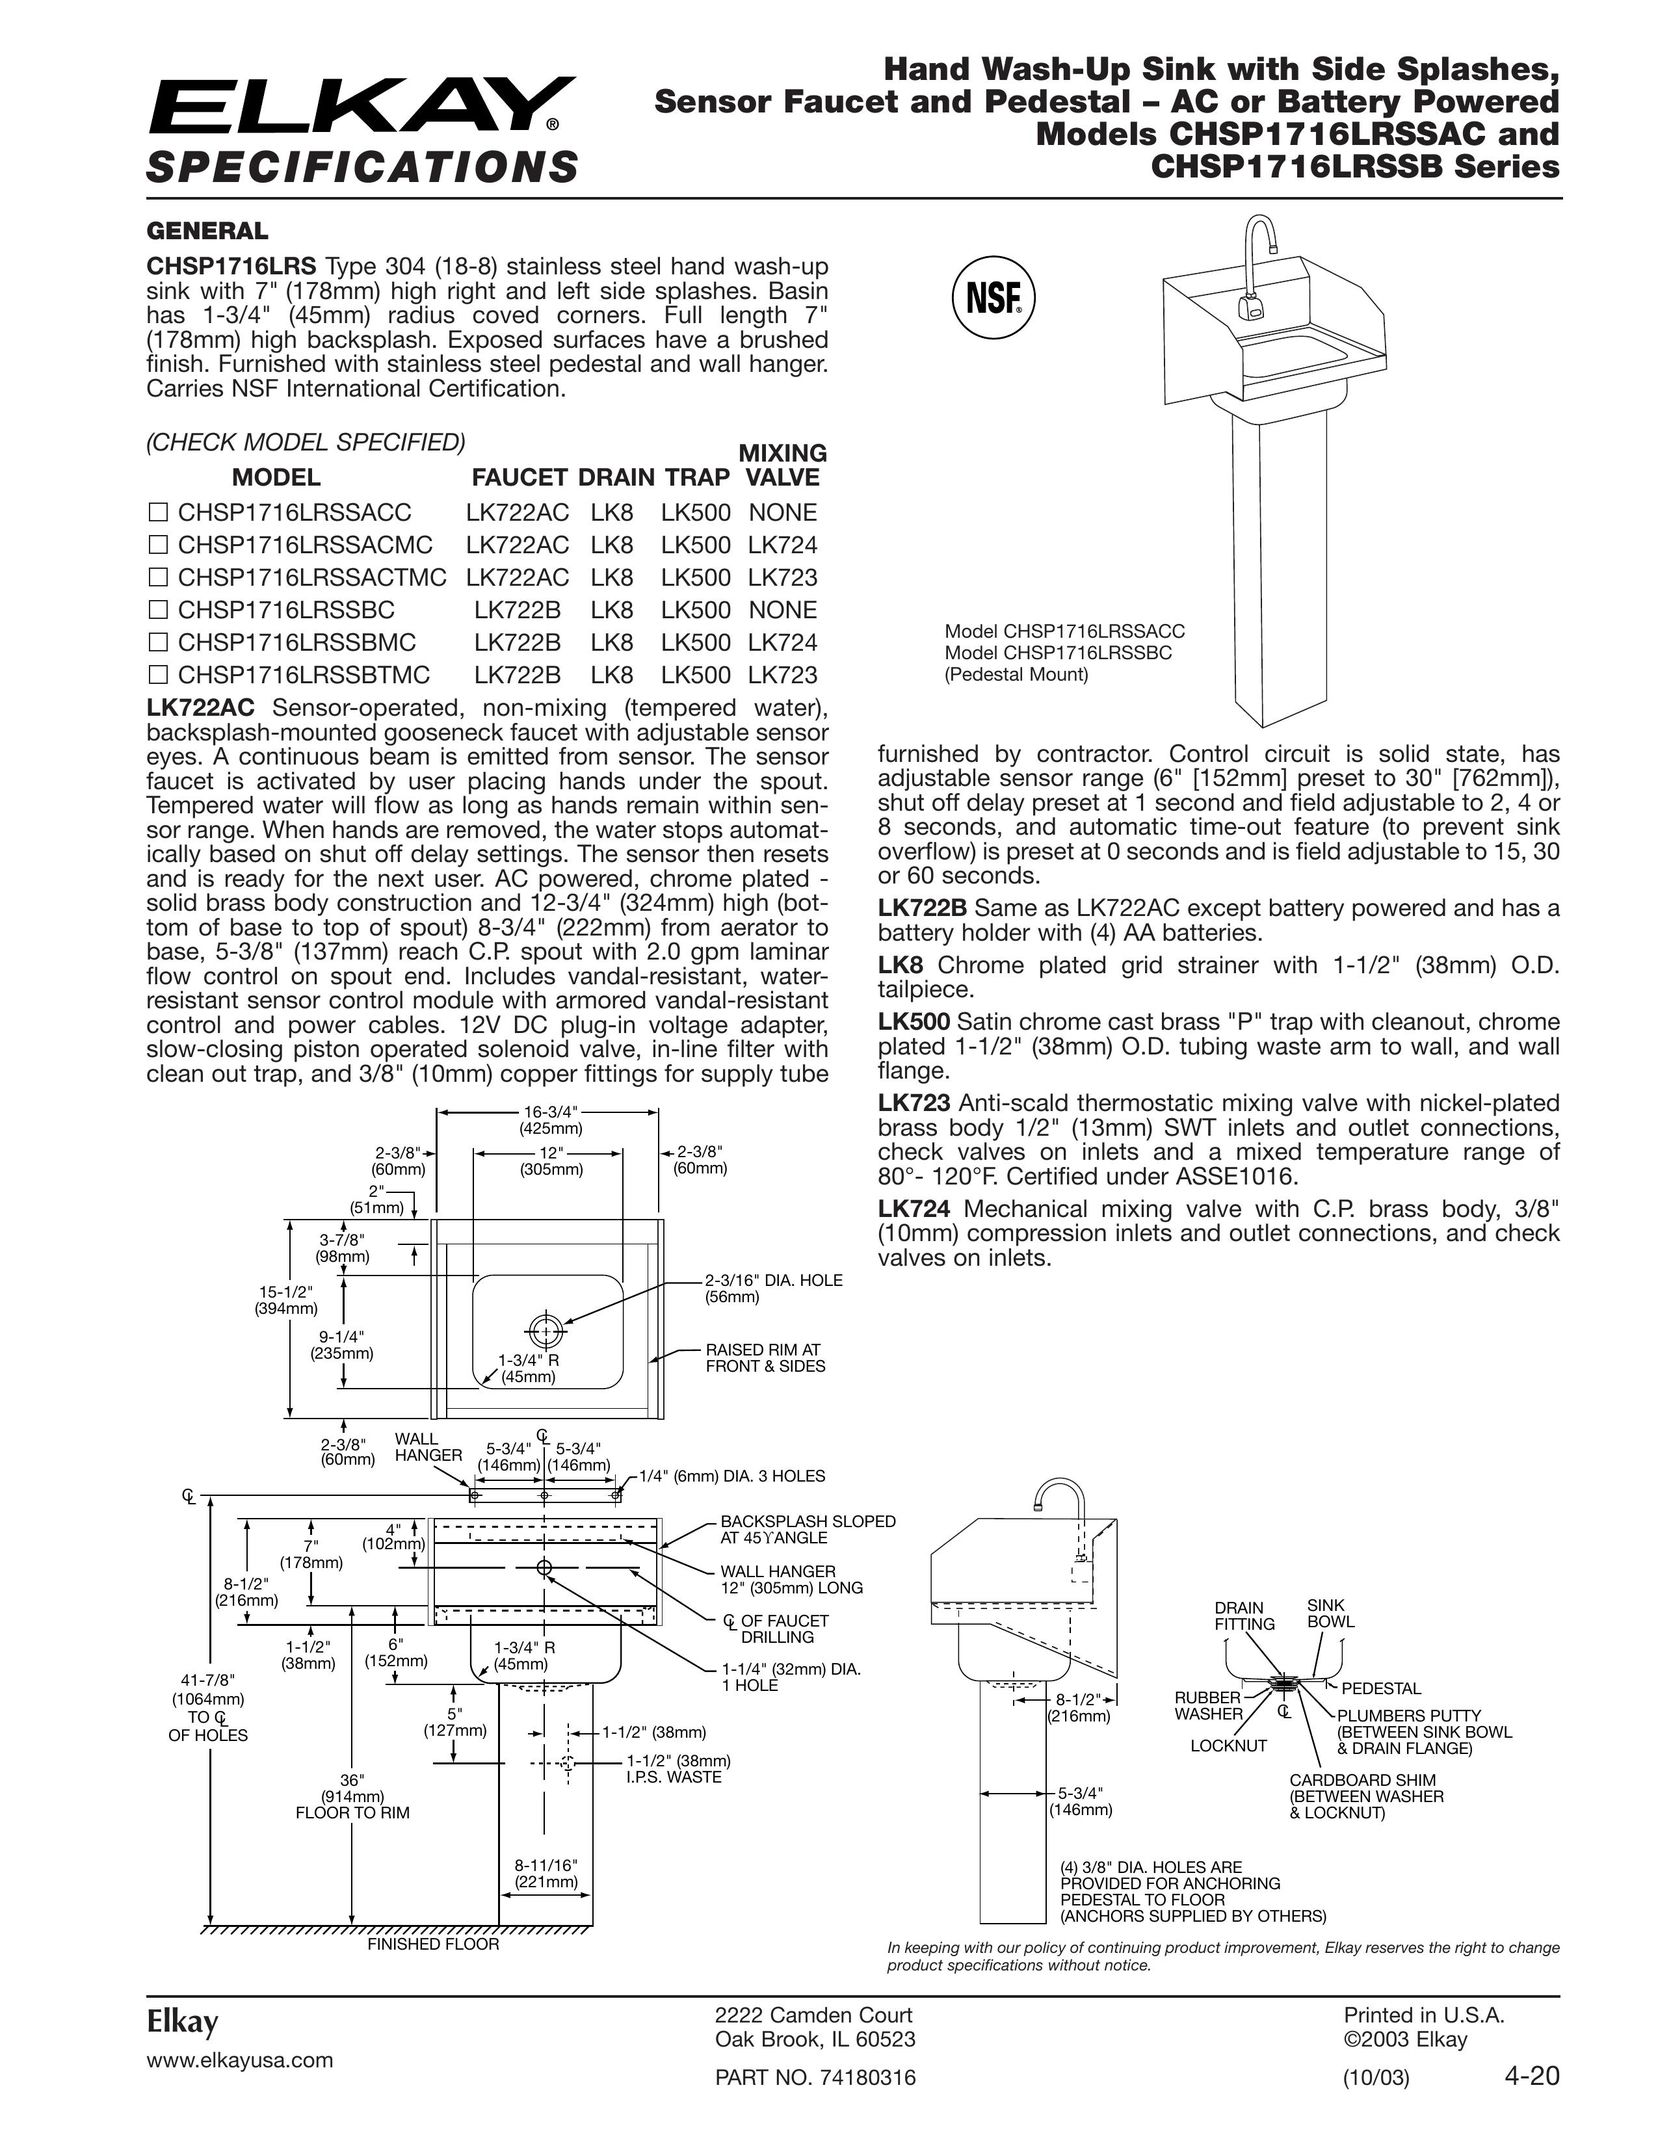 Elkay CHSP1716LRSSAC Indoor Furnishings User Manual